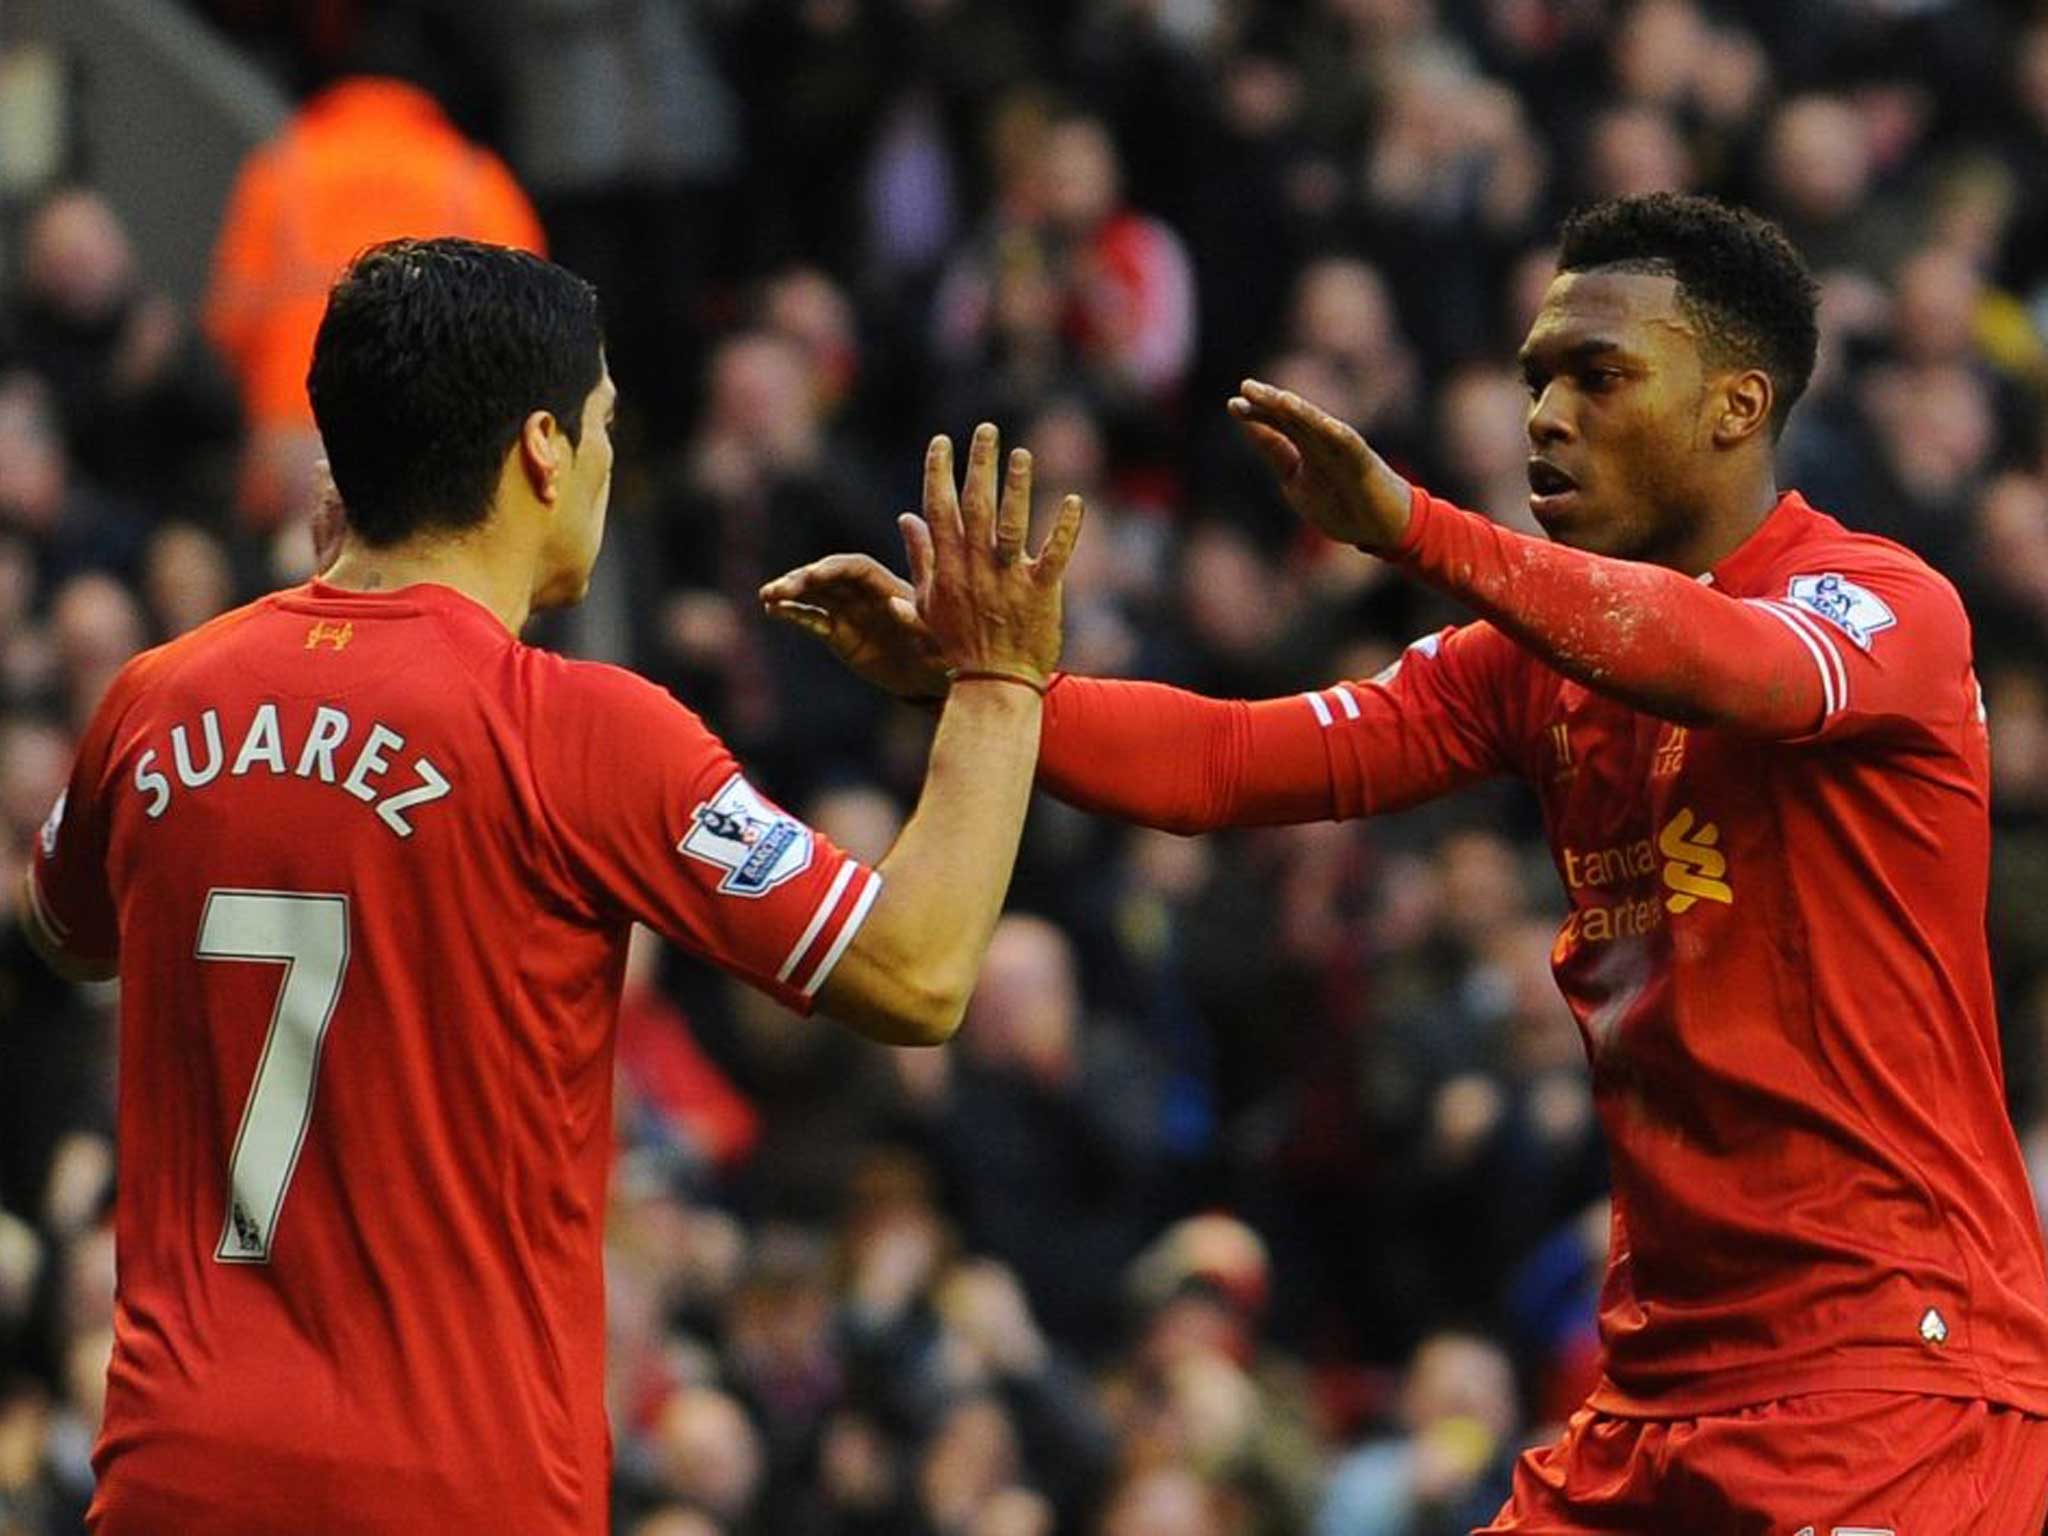 Partners in crime: Liverpool strikers Luis Suarez and Daniel Sturridge